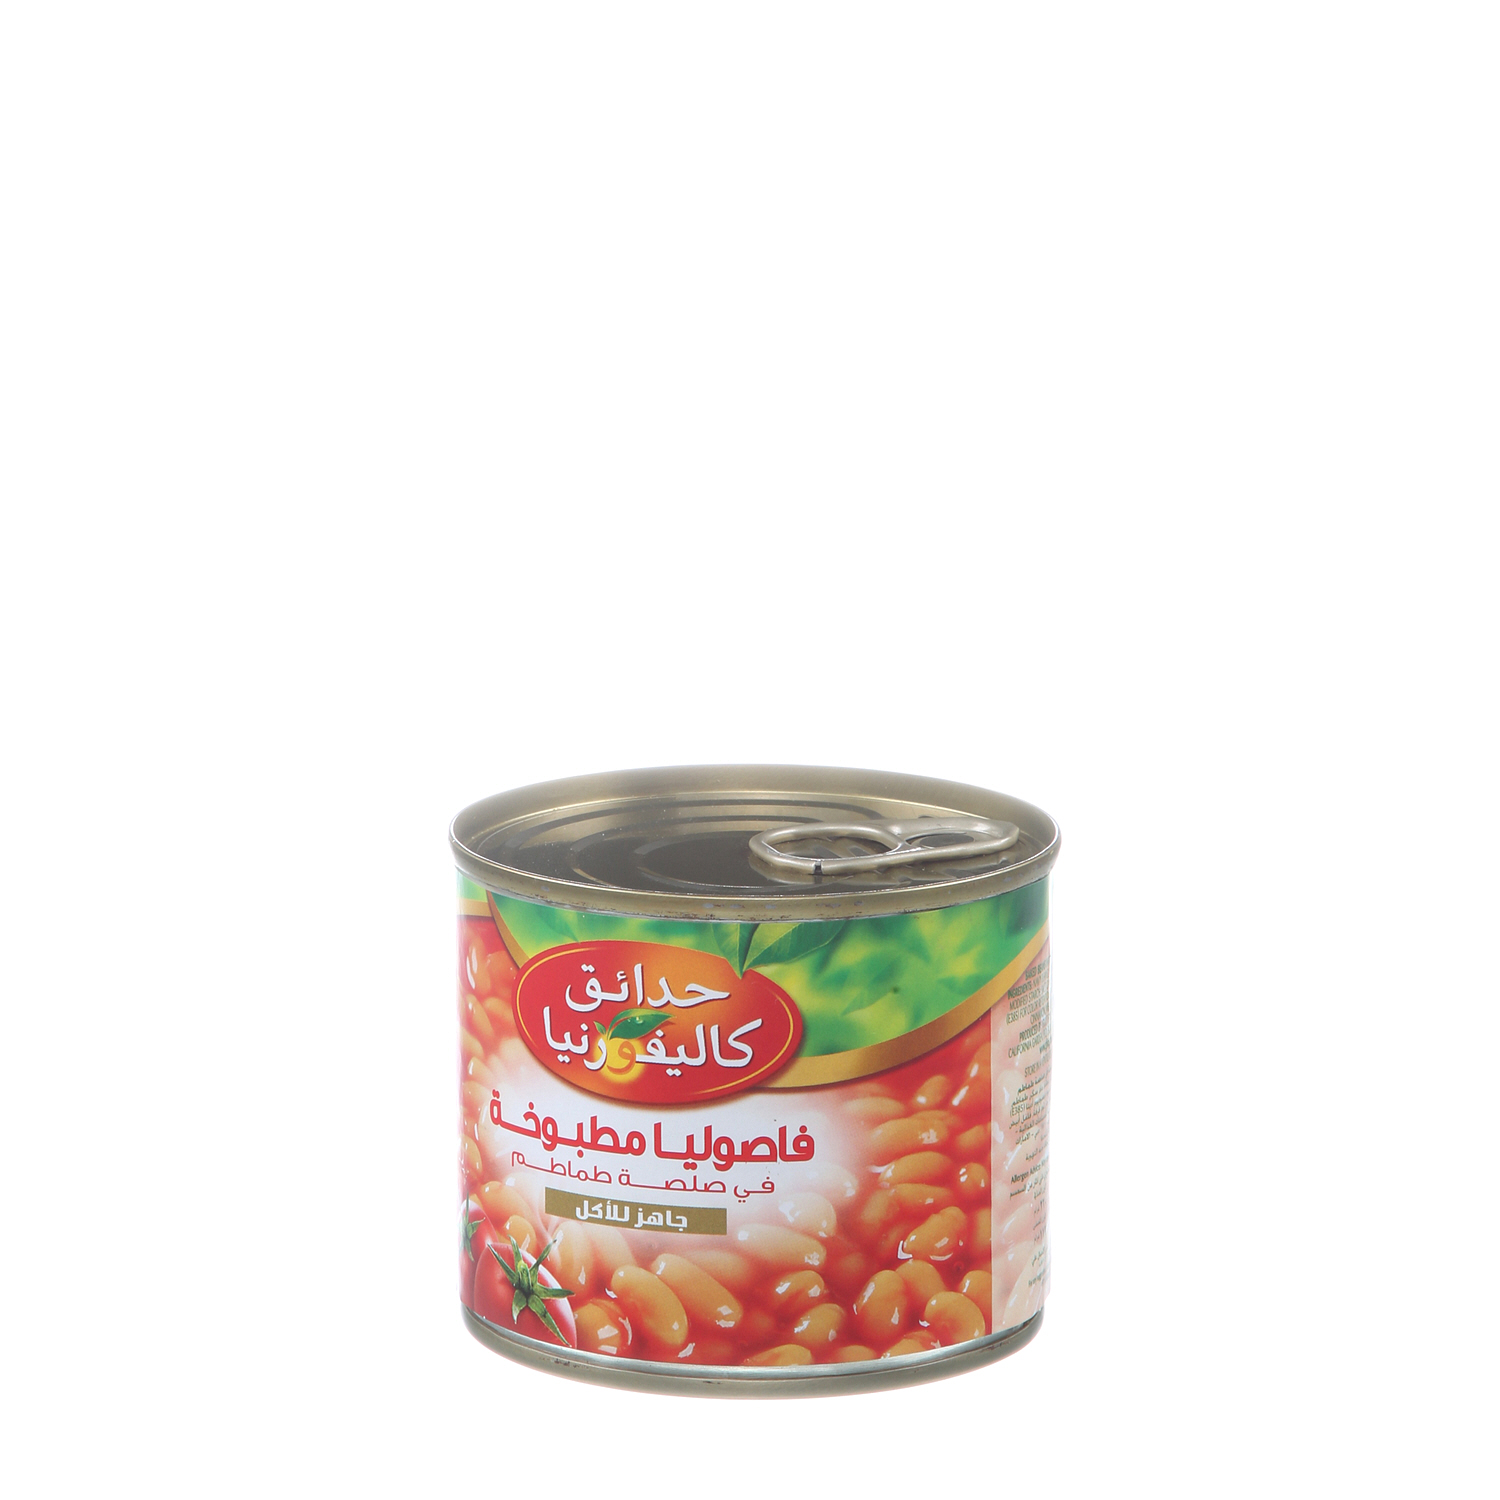 California Garden Baked Beans In Tomato Sauce 220 g